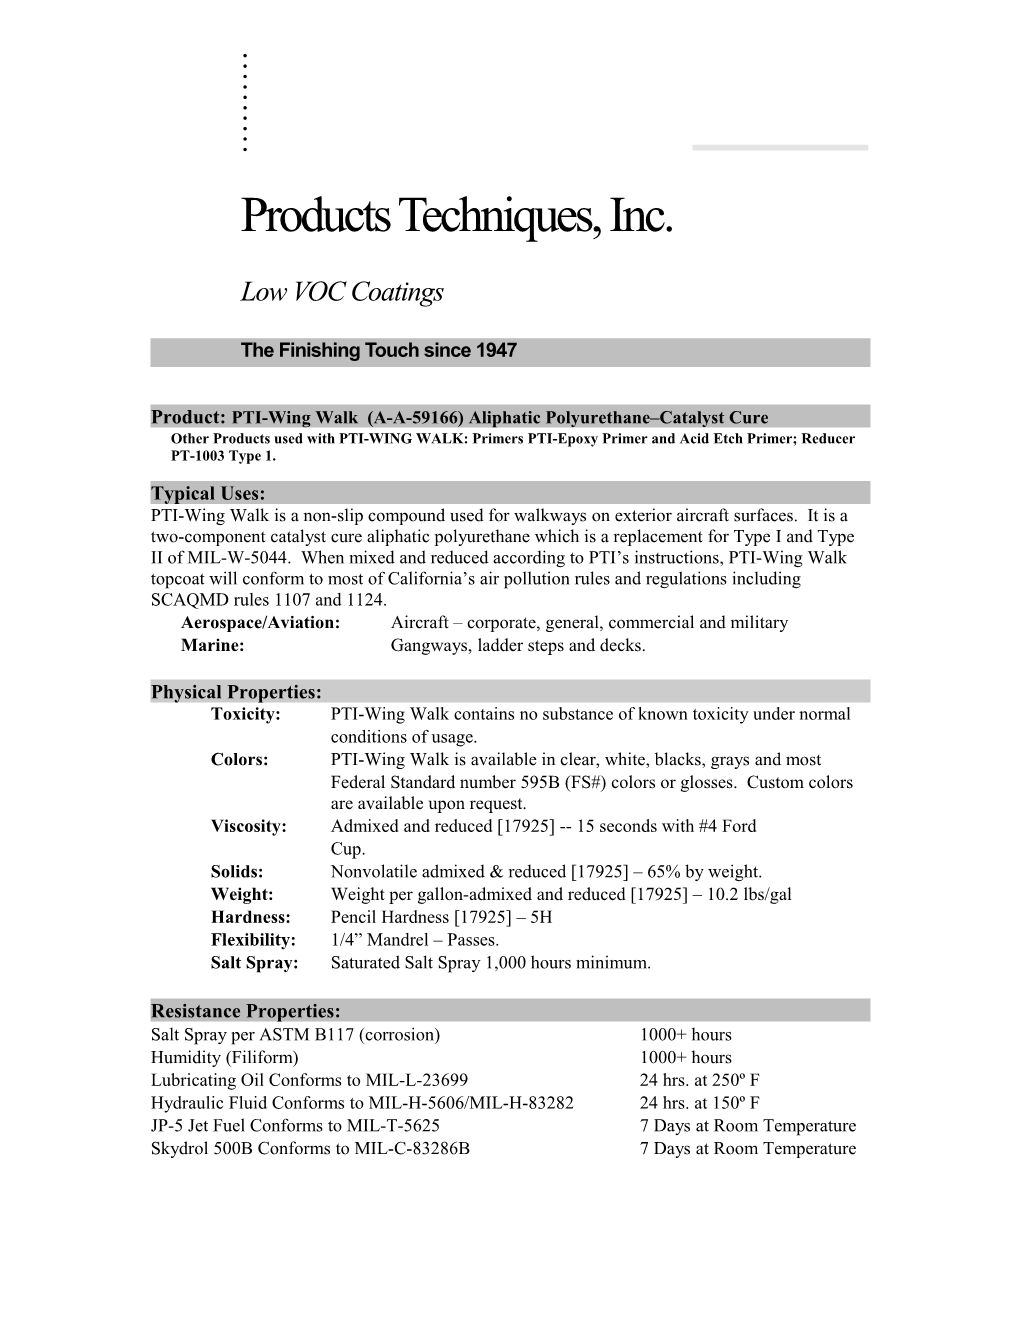 Products/Techniques, Inc